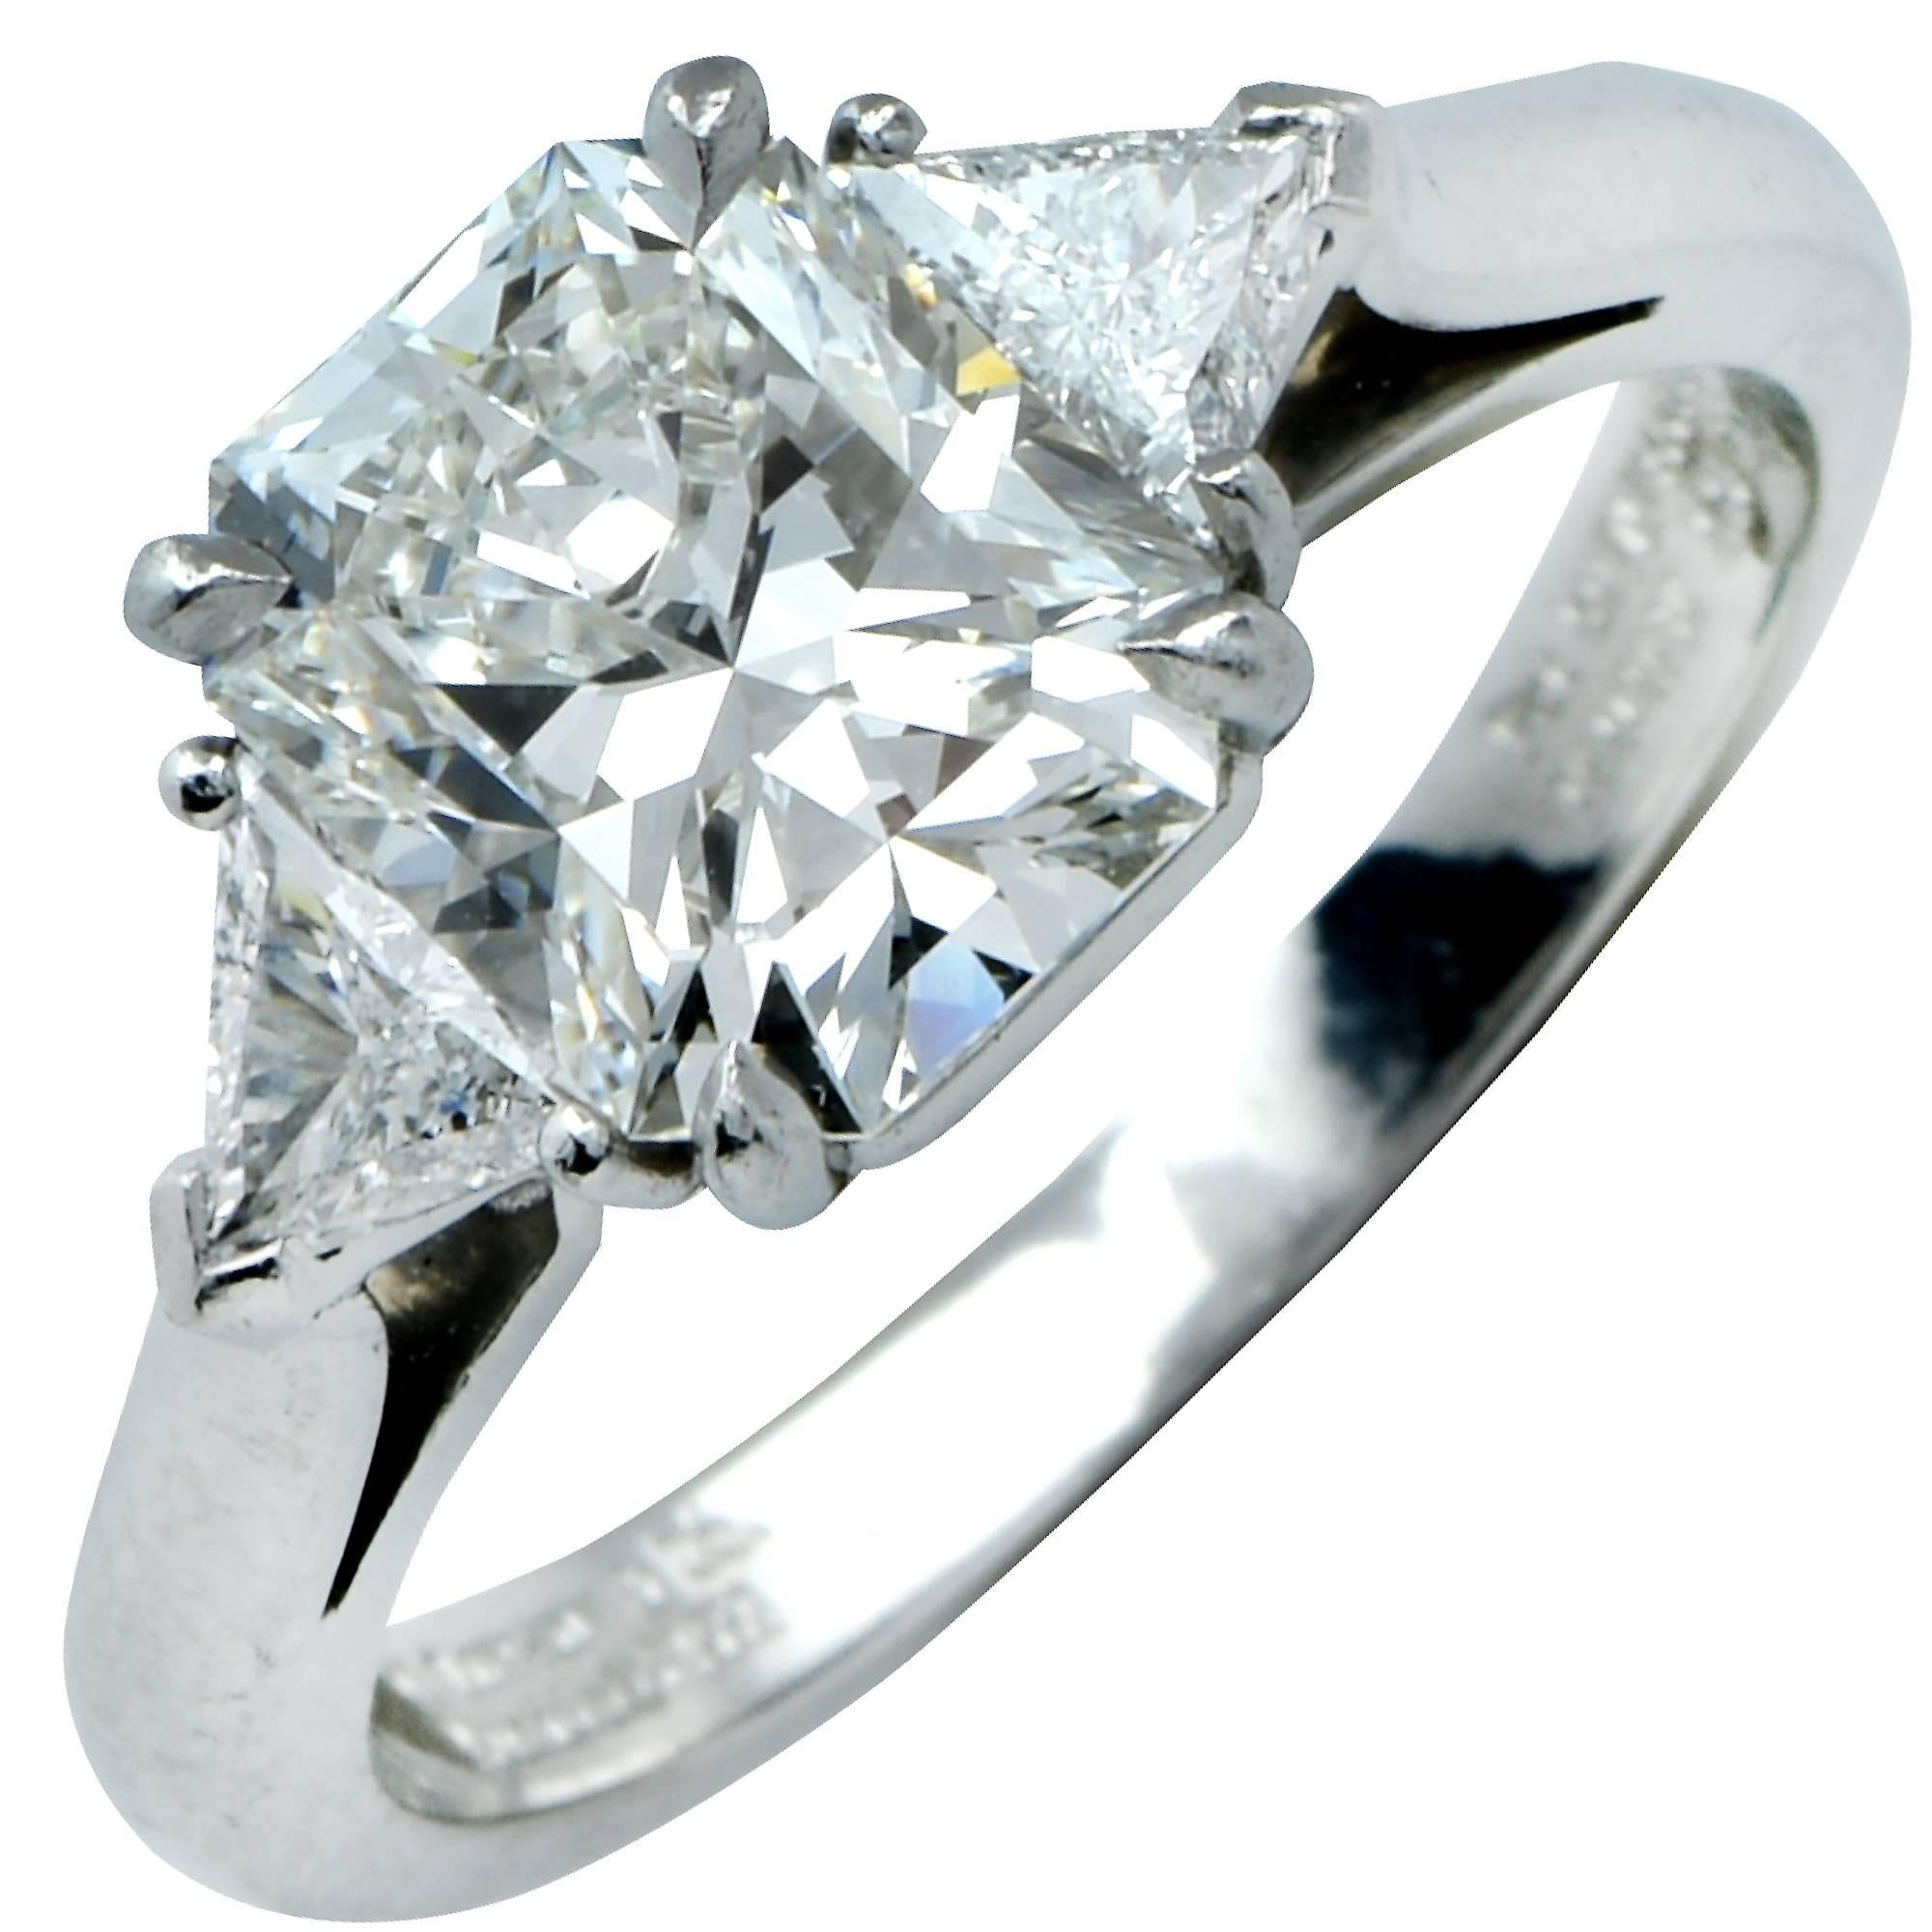 Tiffany & Co. GIA Graded 2.59 Carat Diamond Engagement Ring